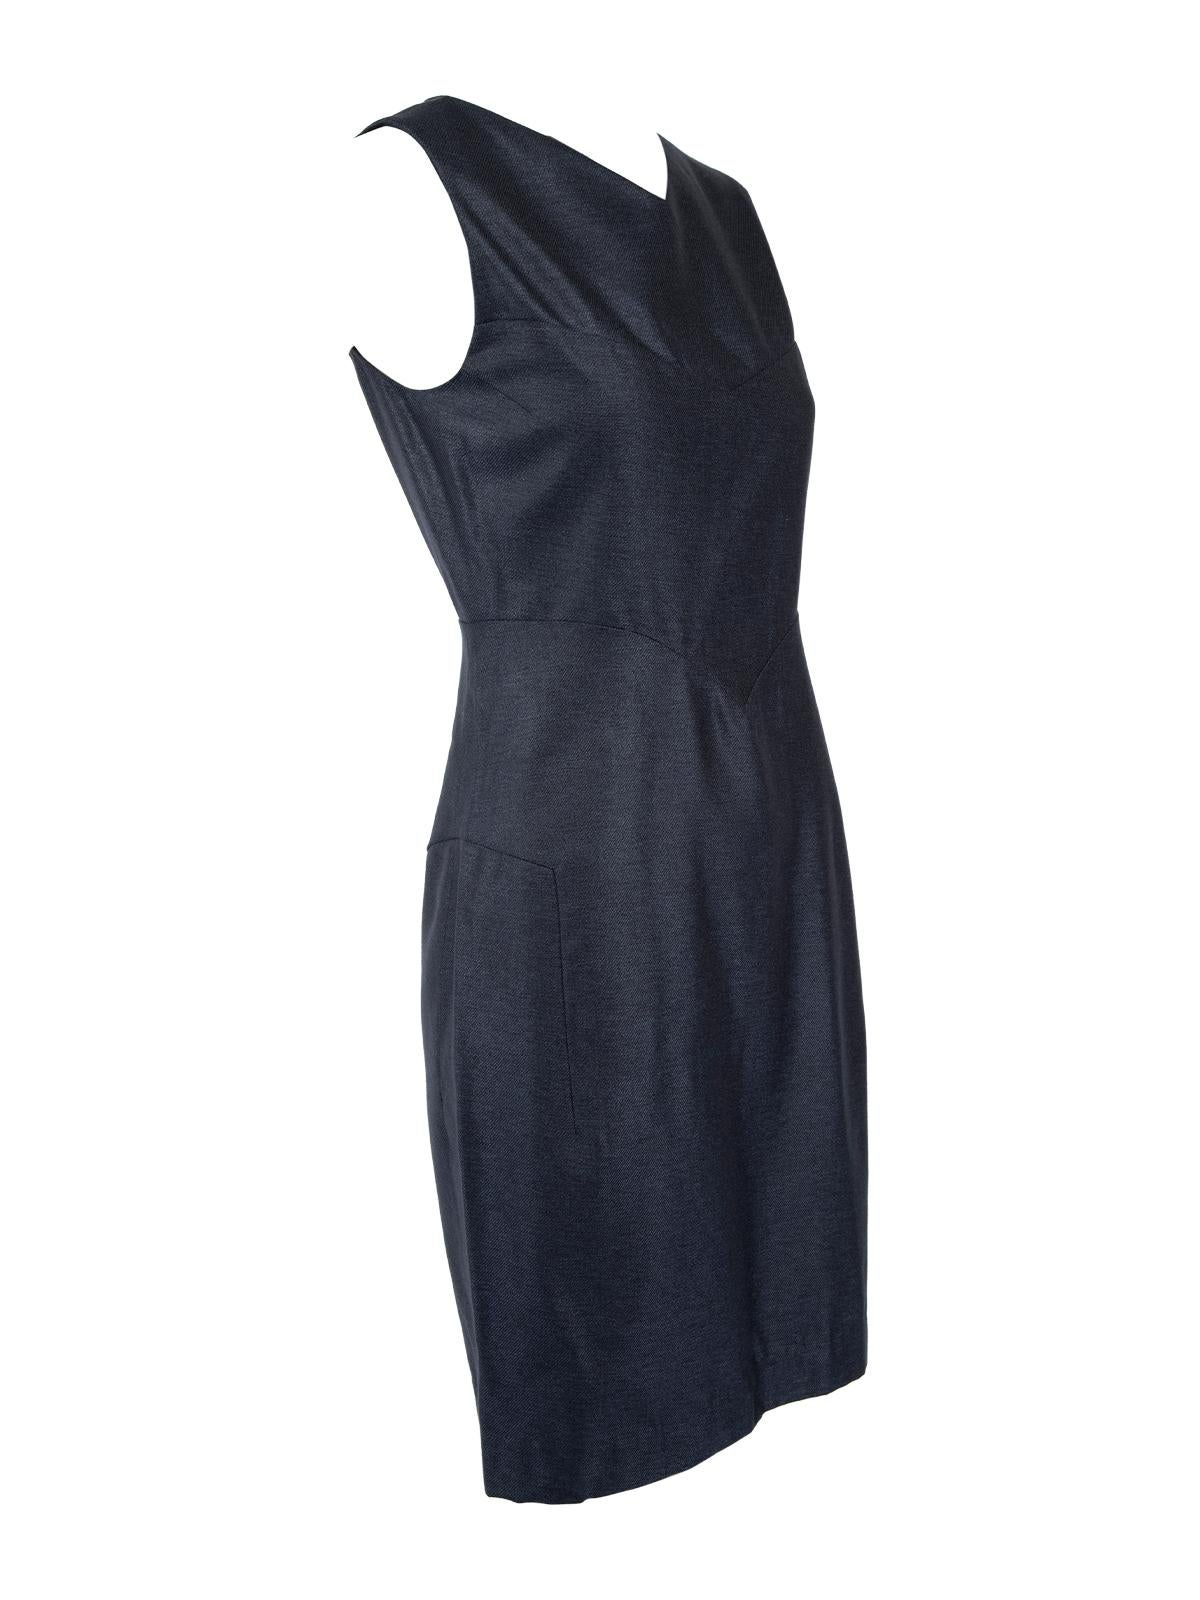 Jil Sander Sleeveless Denim Style Dress Size XXS In Excellent Condition In London, GB